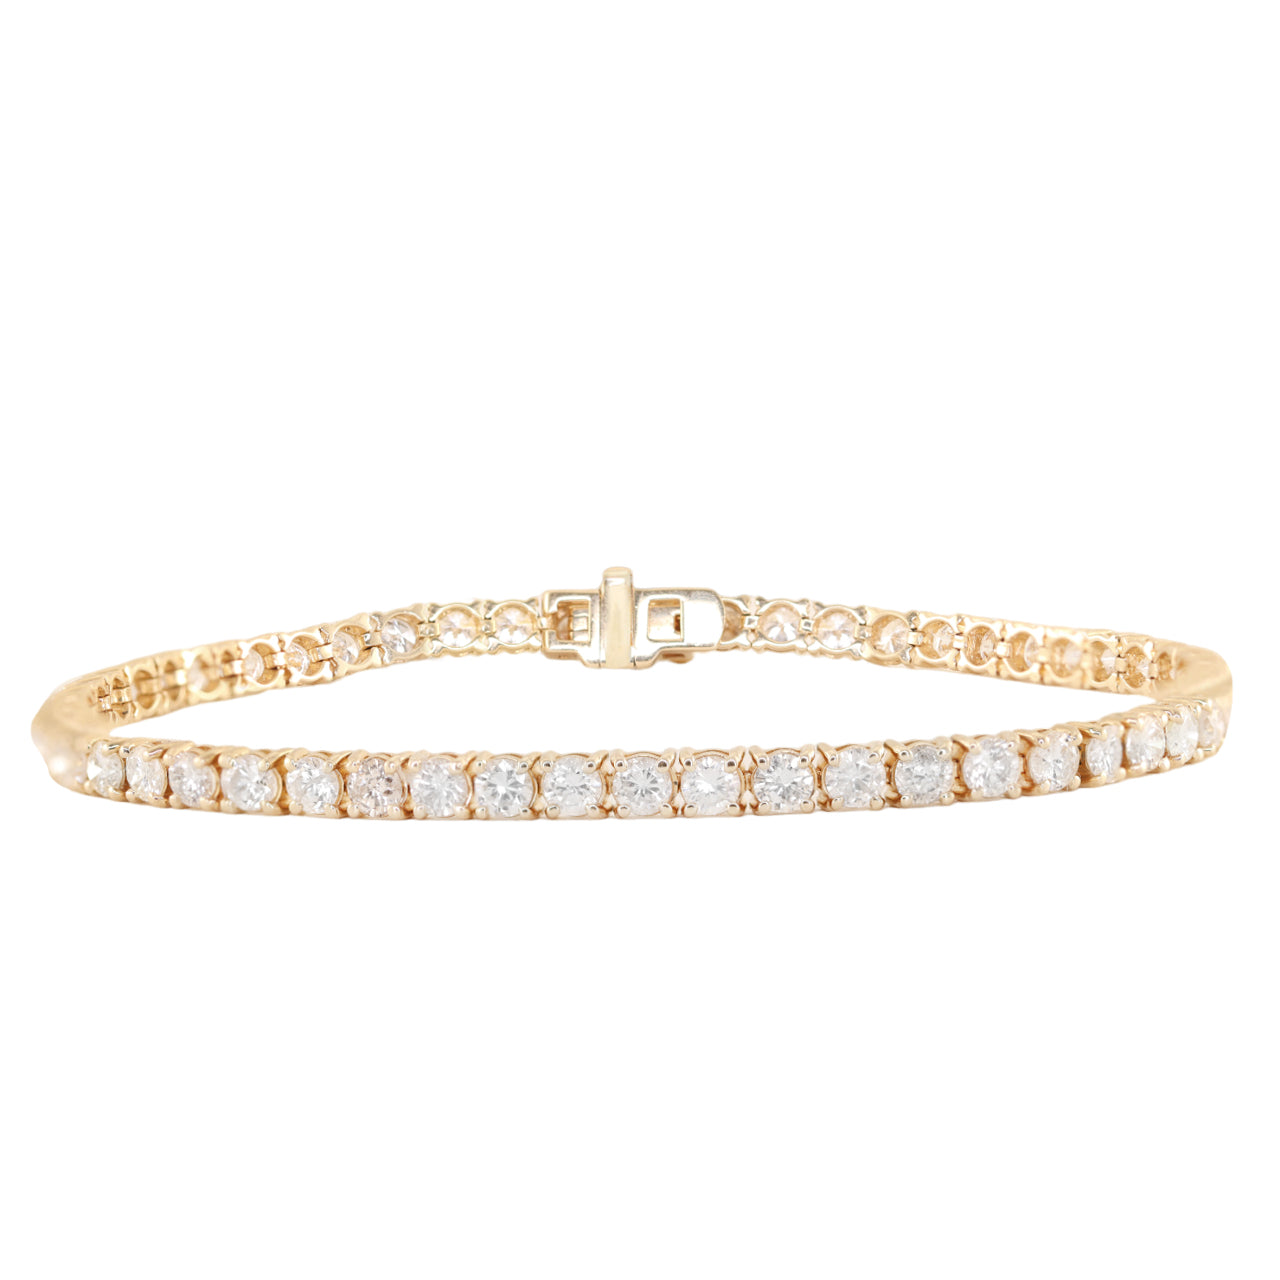 14KT White Gold Tennis Bracelet 5.00 CT. T.W. - Spence Diamonds